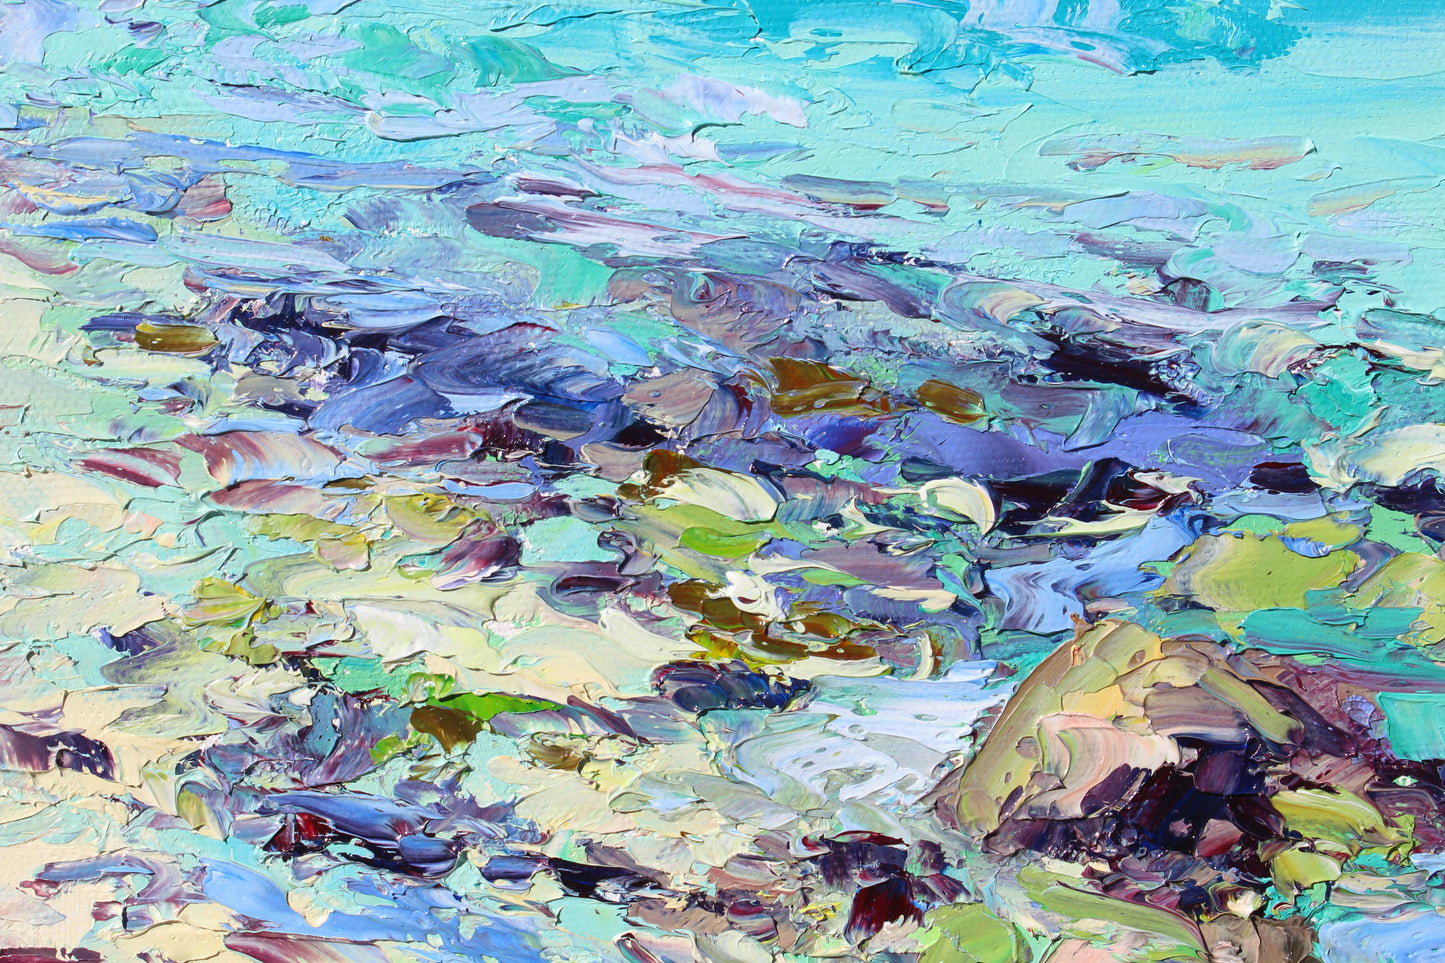 Seaside In Balandra Bay, An Original 12" x 10" Seascape Oil Painting On Canvas